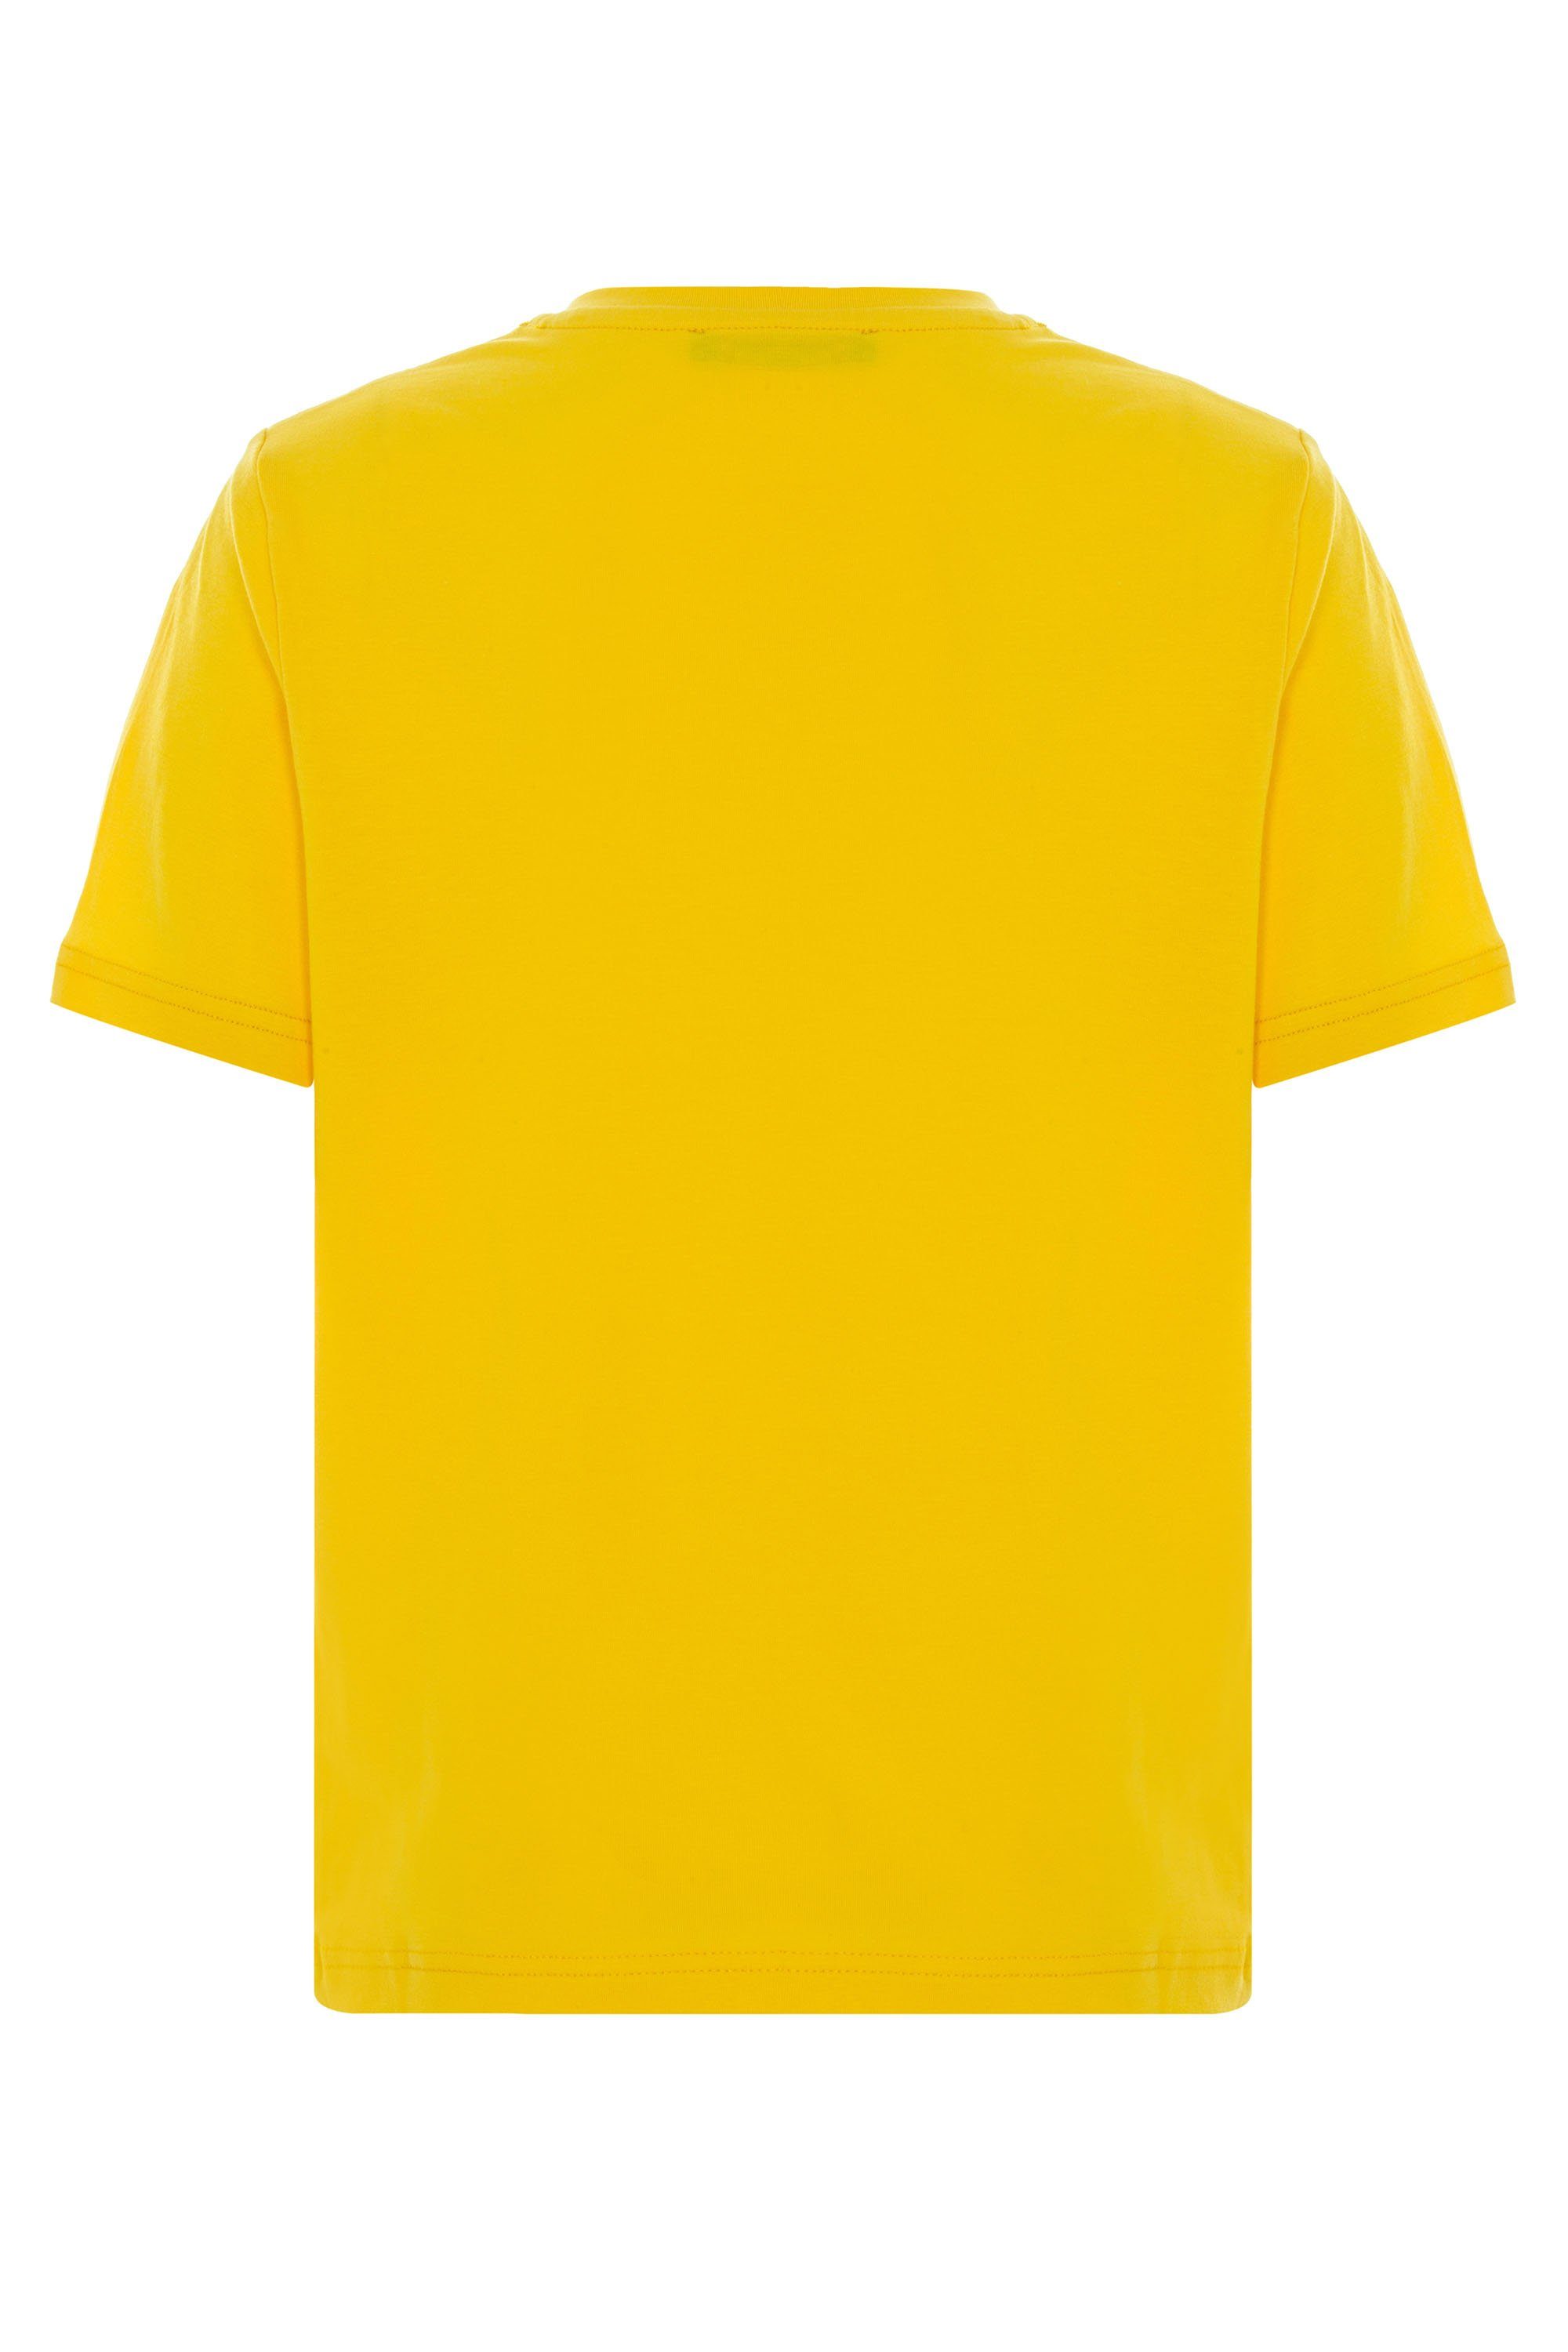 Cipo & Baxx T-Shirt mit gelb-schwarz Print coolem